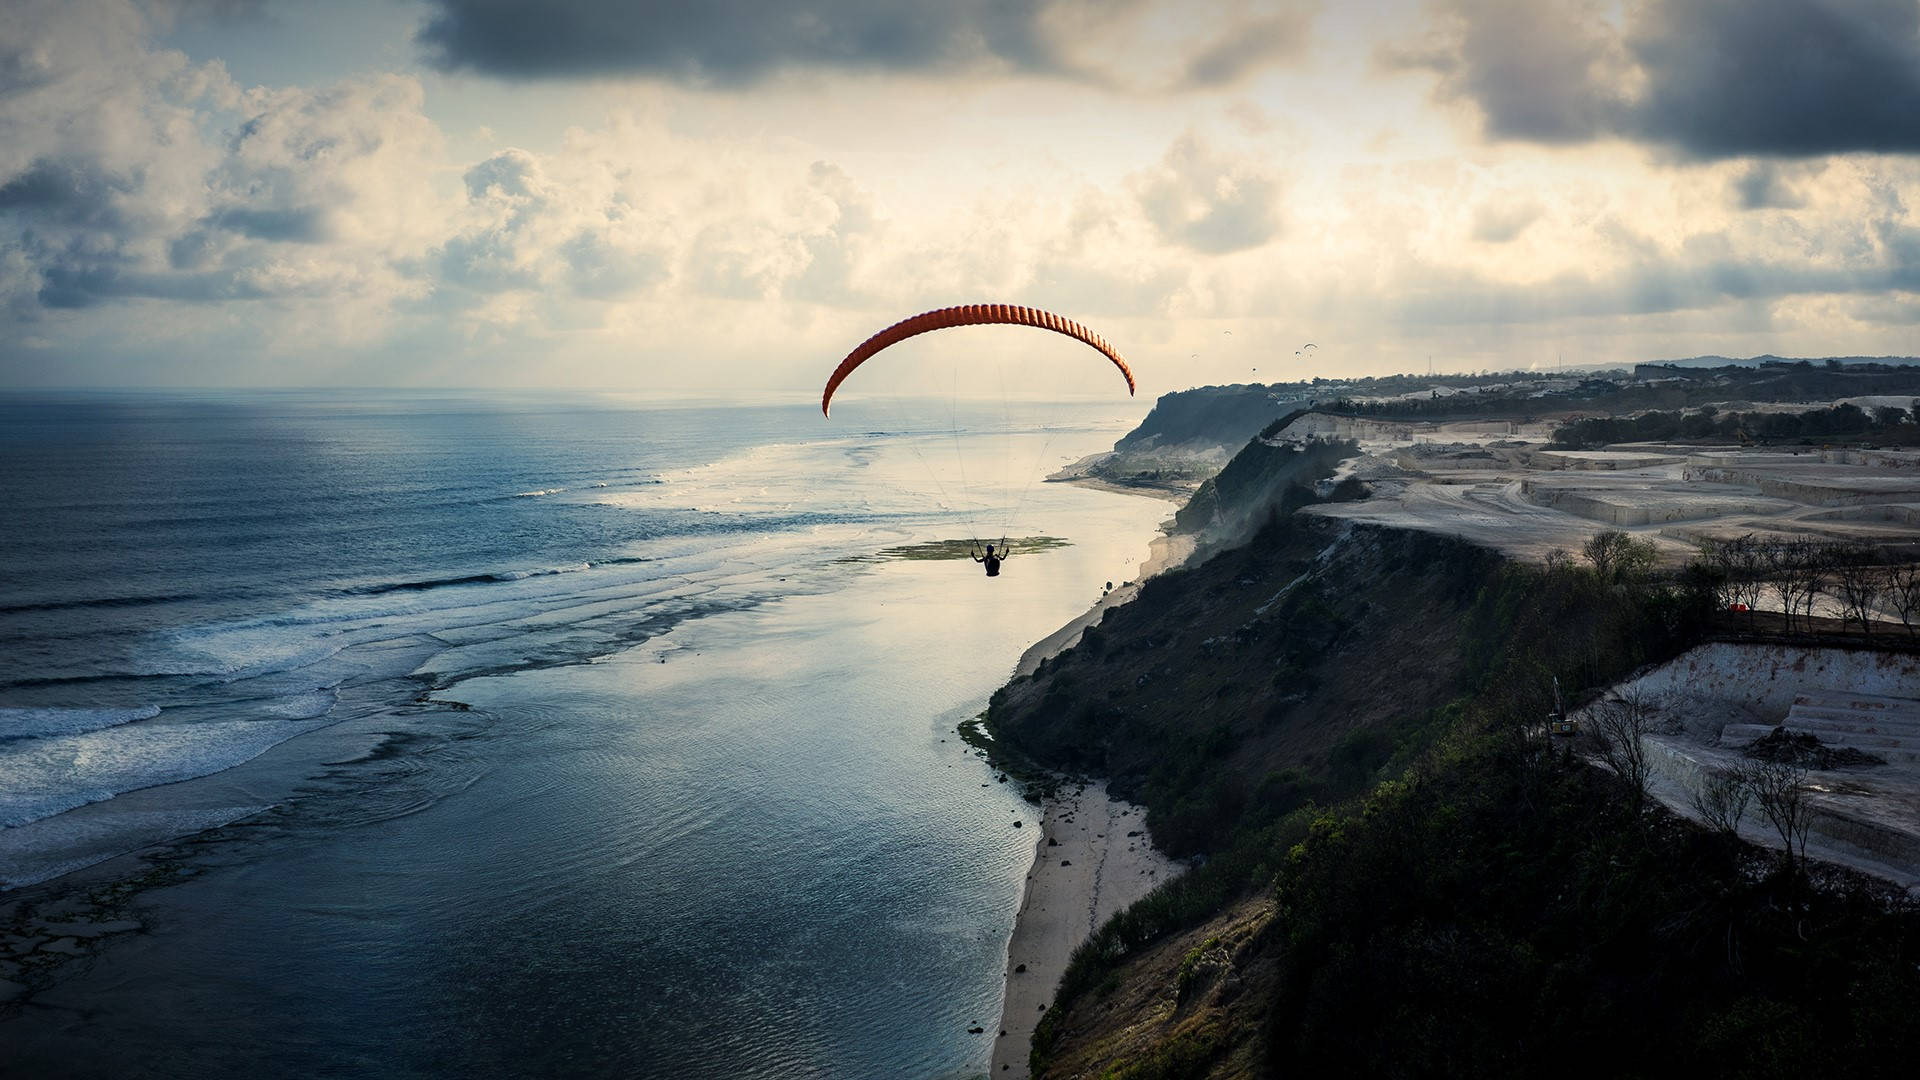 Paragliding Near A Cliffside Beach Background